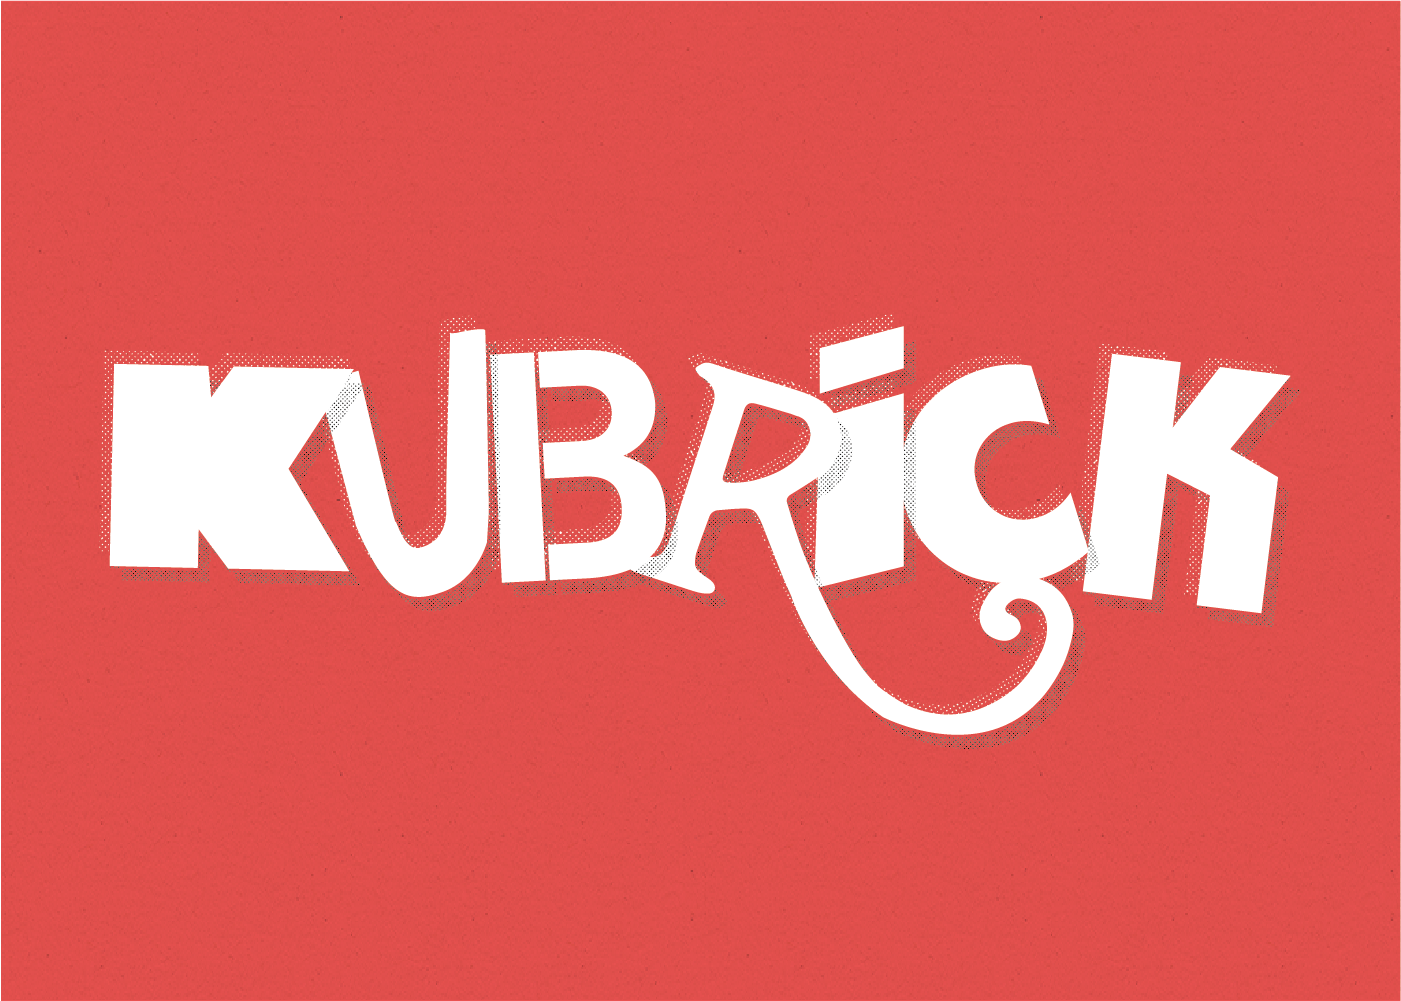 Kubrick – Inspiration from the master filmmaker